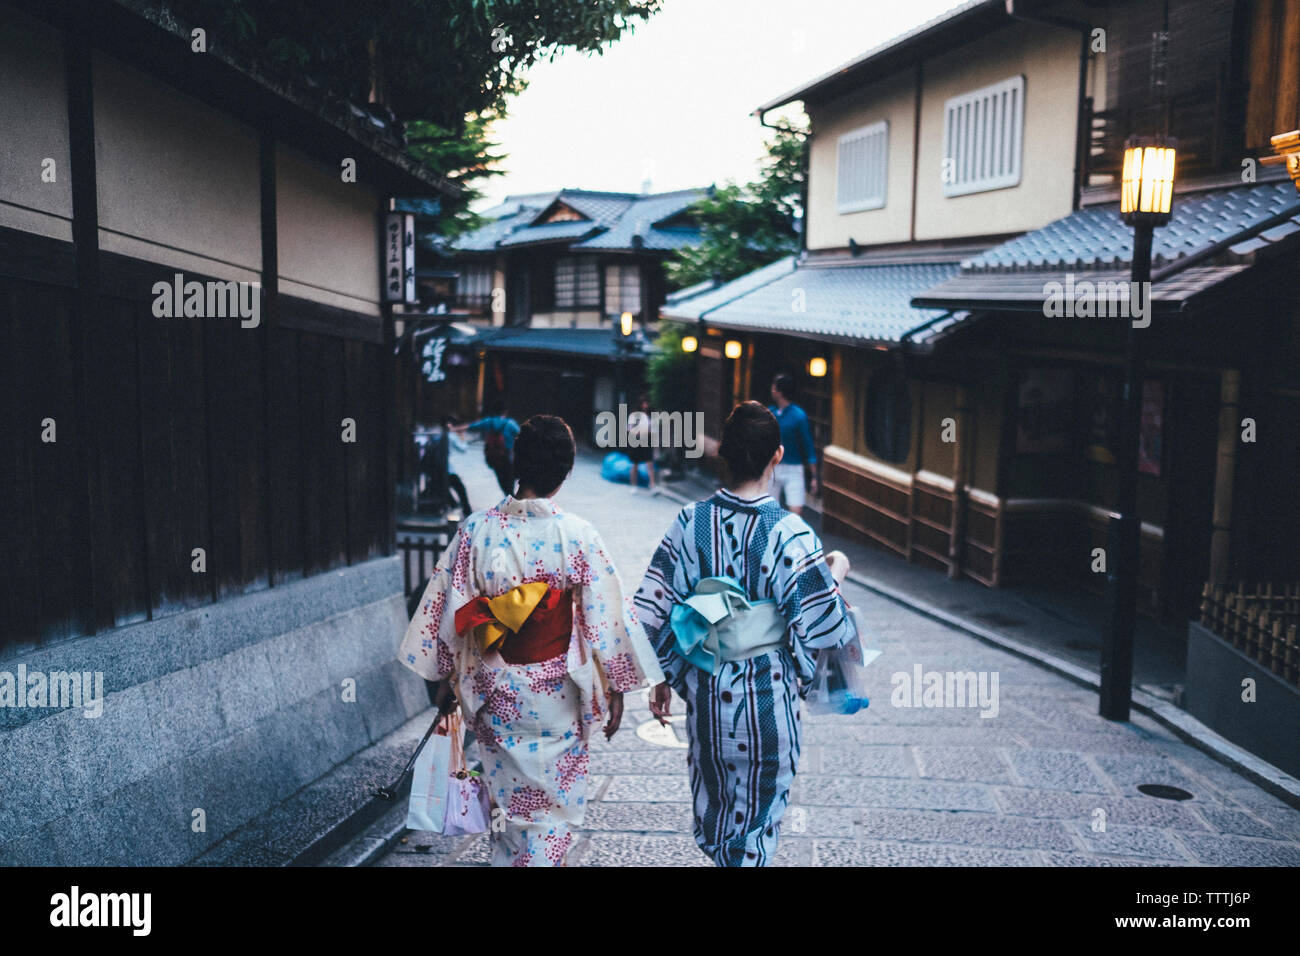 Rear view of women in kimono walking on walkway amidst residential buildings Stock Photo